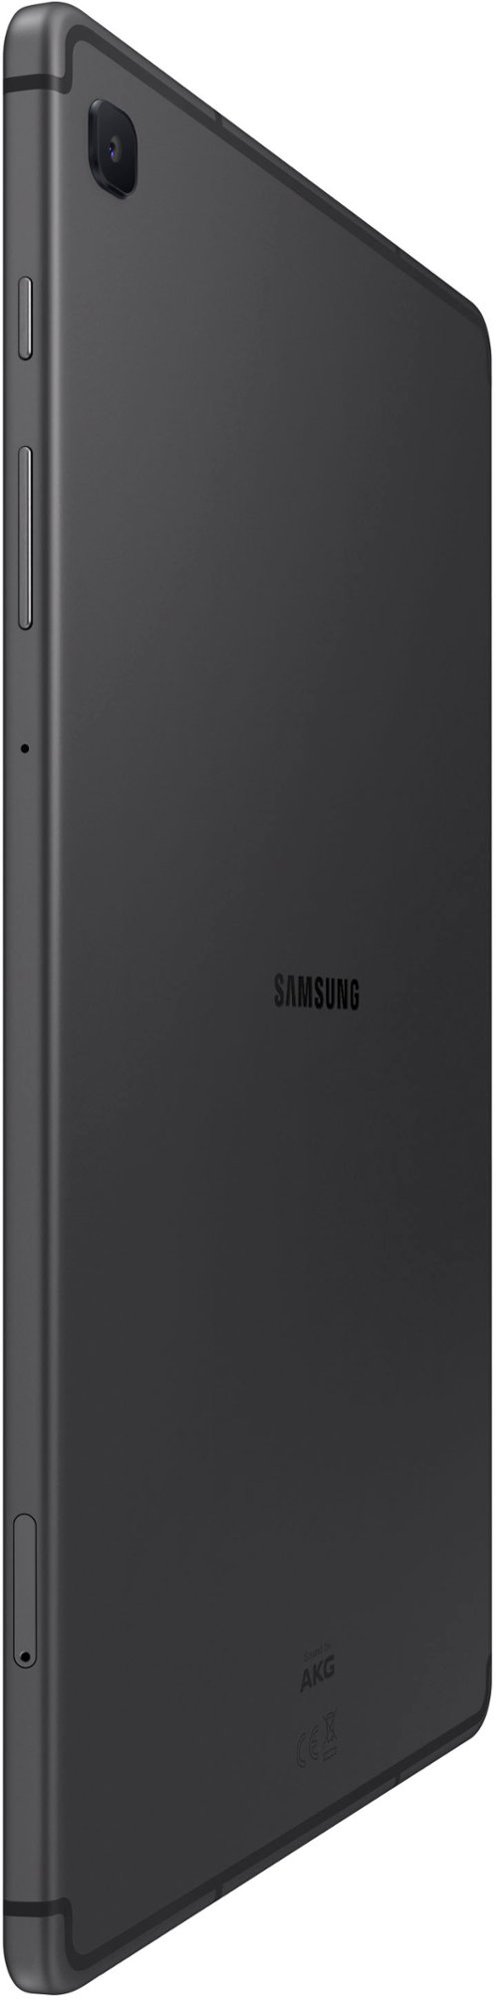 Samsung Galaxy Tab S6 10.4"  Lite Tablet (Wi-Fi, Oxford Gray, 2022)